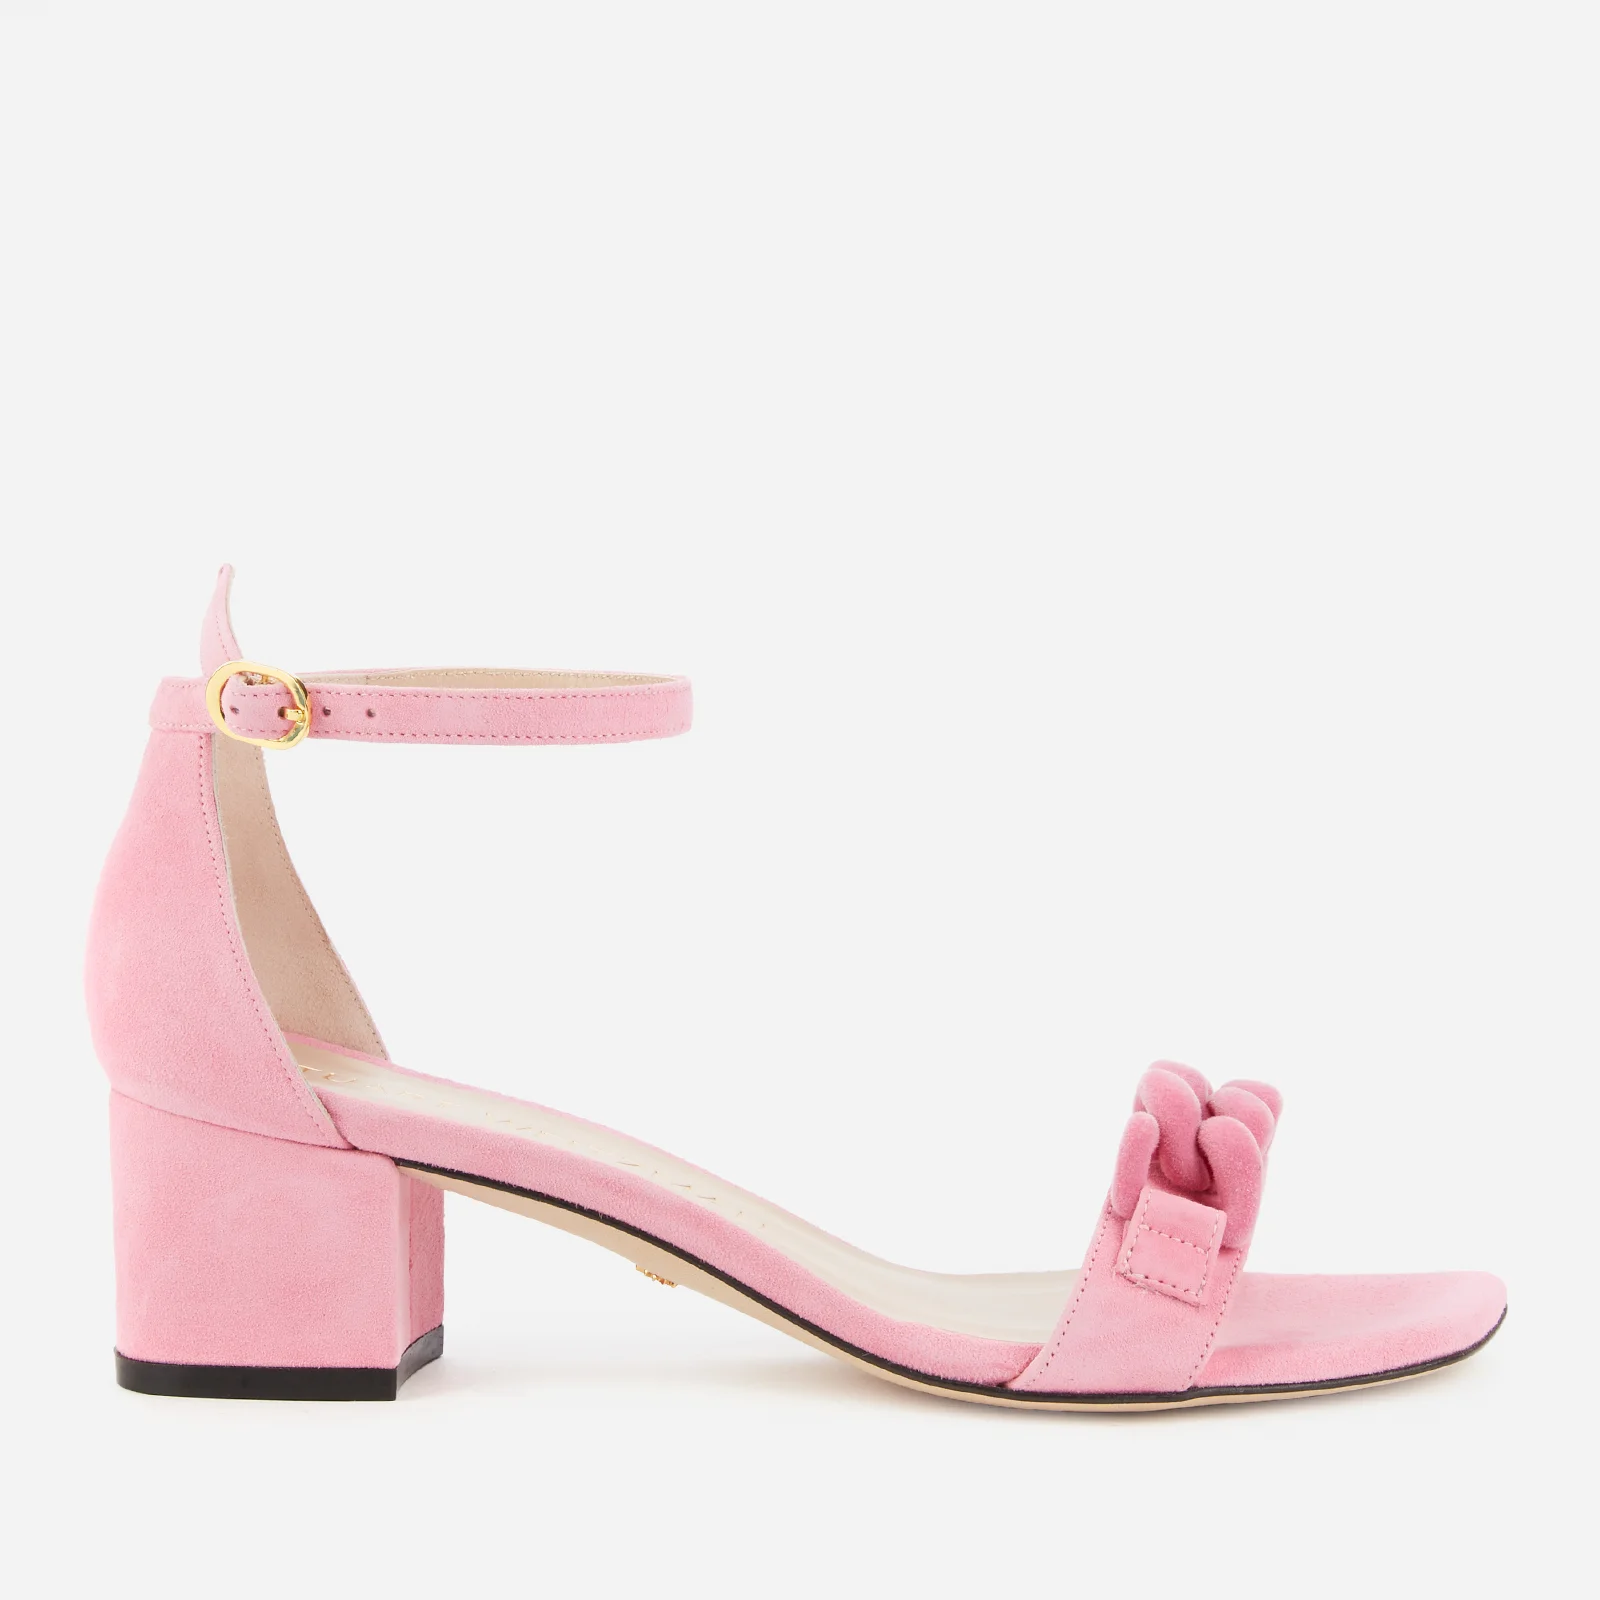 Stuart Weitzman Women's Amelina Chain Block Heeled Sandals - India Pink Image 1